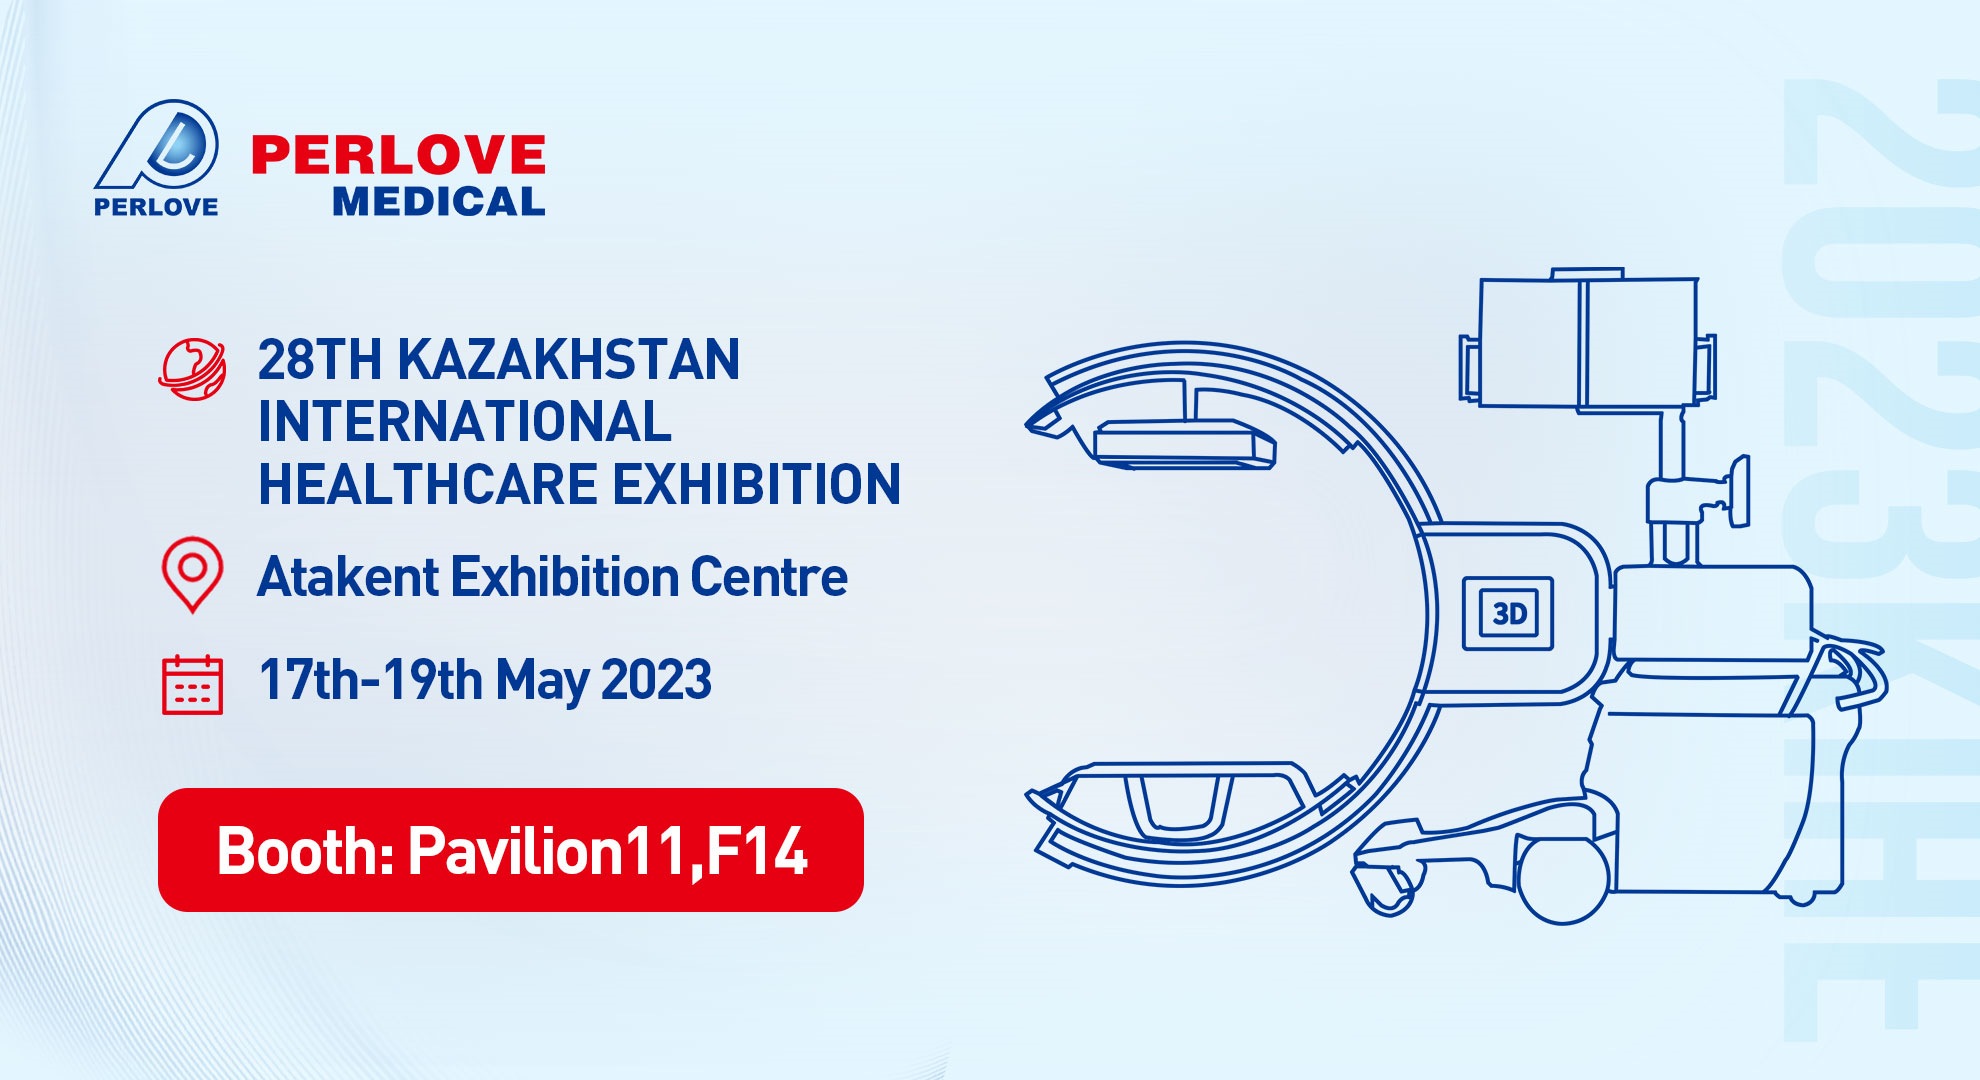 28TH KAZAKHSTAN INTERNATIONAL HEALTHCARE EXHIBITION 